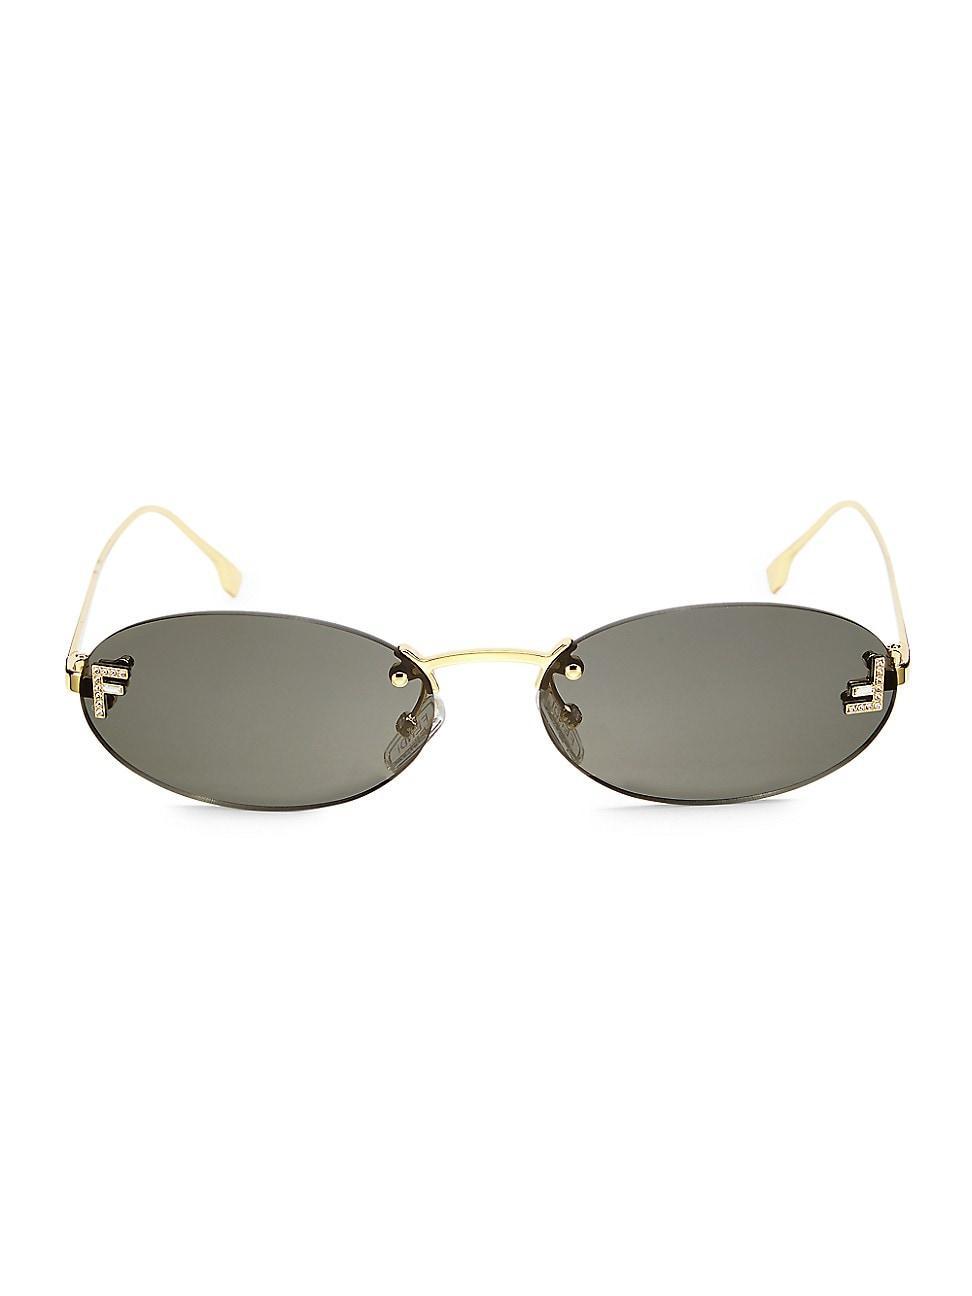 Fendi Embellished FF Oval Metal Sunglasses  - SHINY ENDURA GOLD Product Image